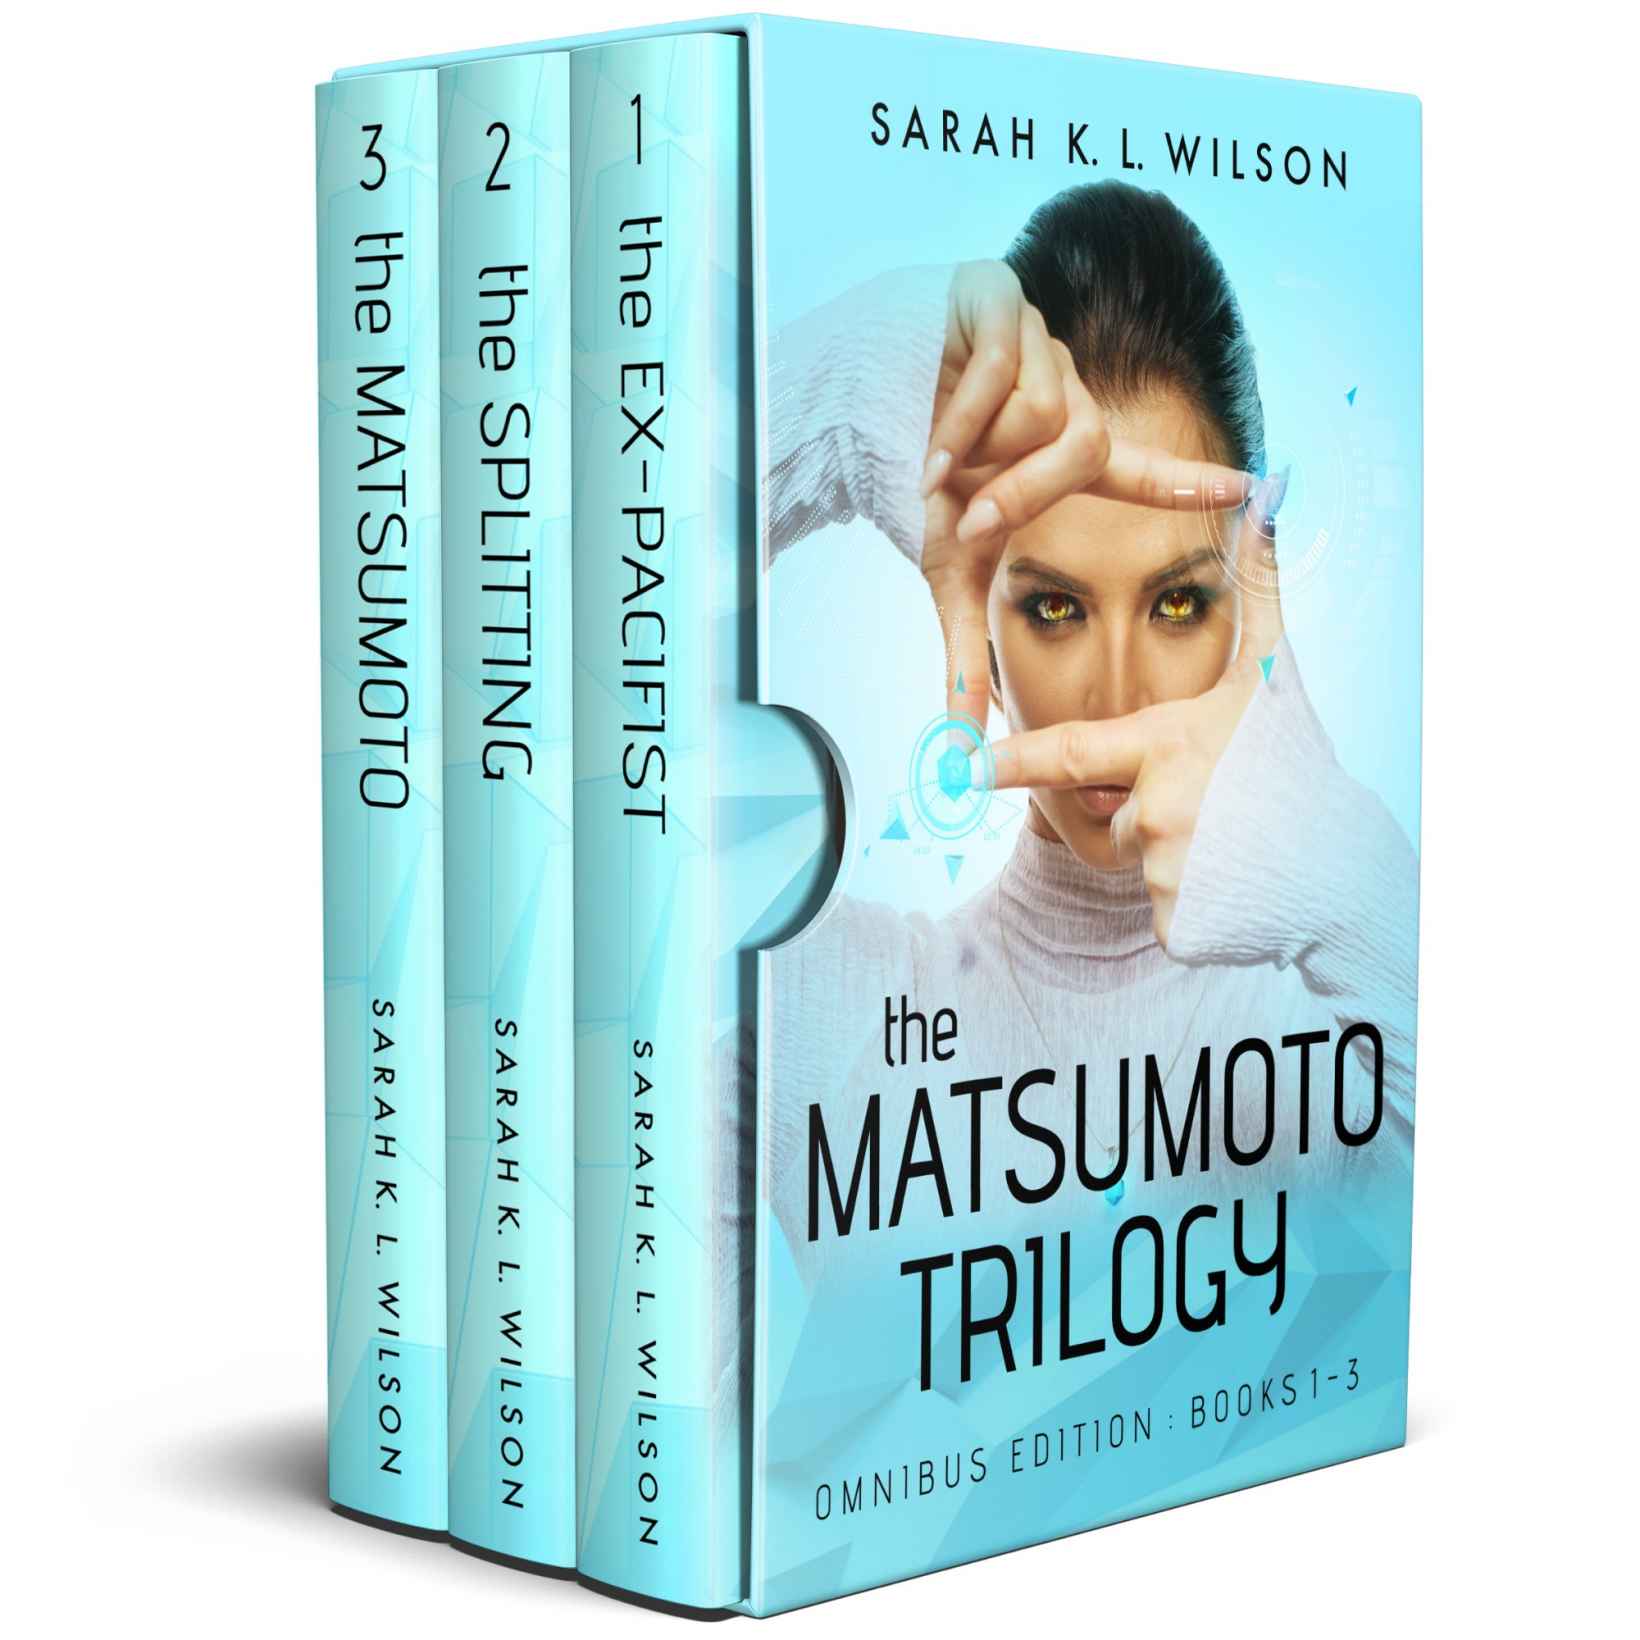 The Matsumoto Trilogy: Omnibus Edition